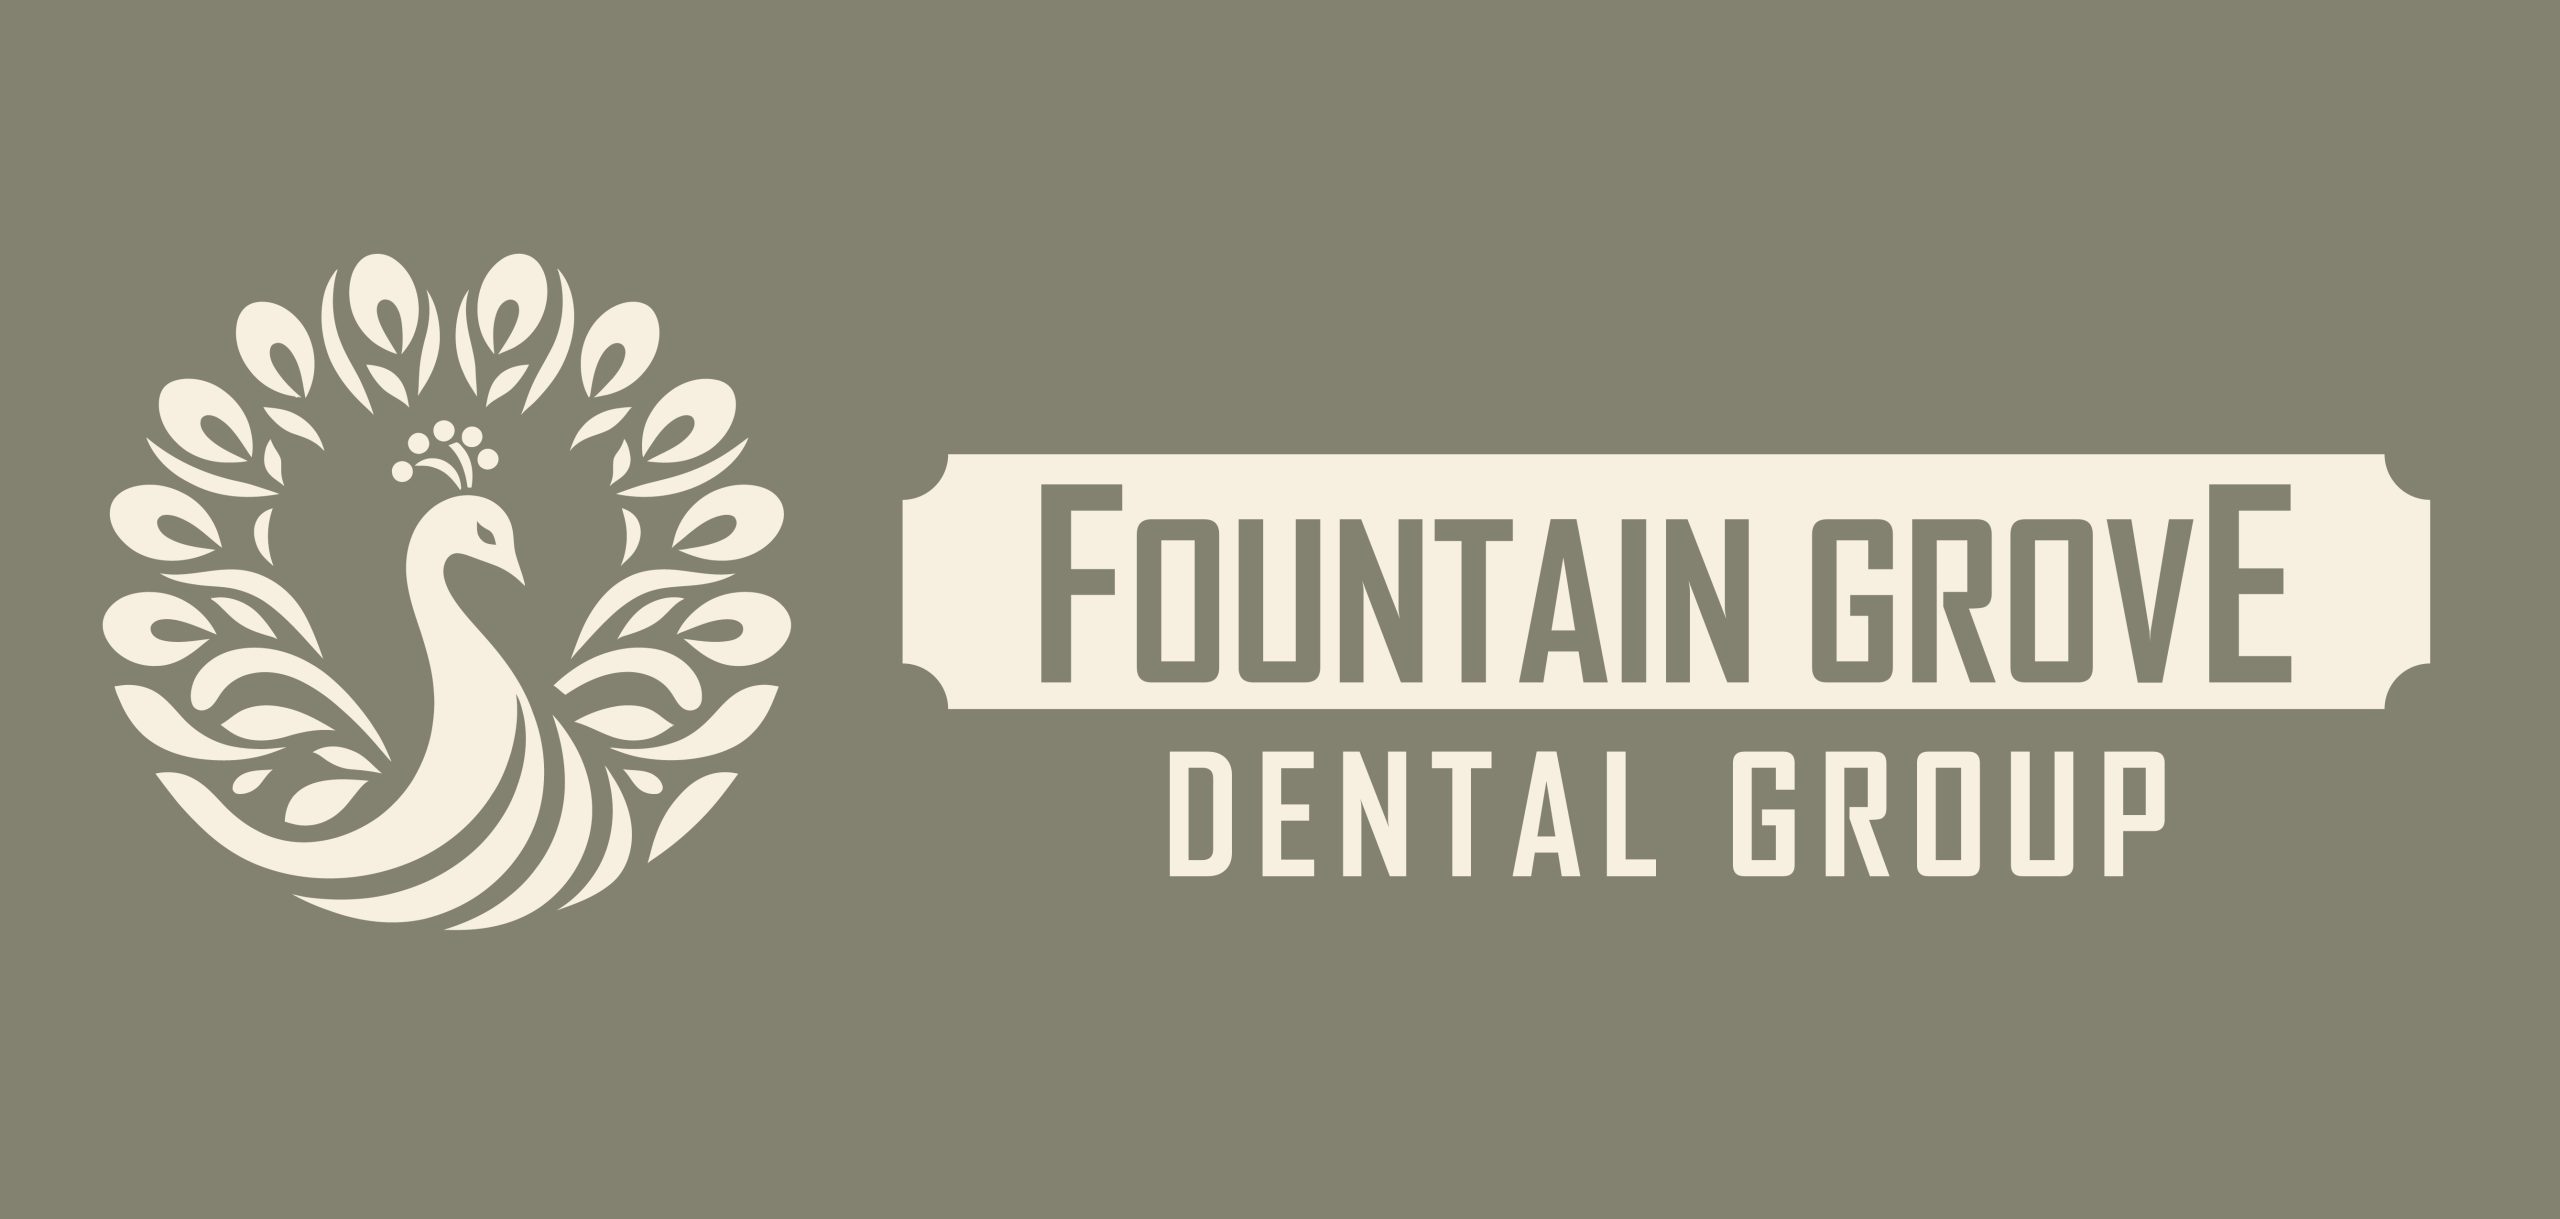 Fountain Grove Dental Grove logo